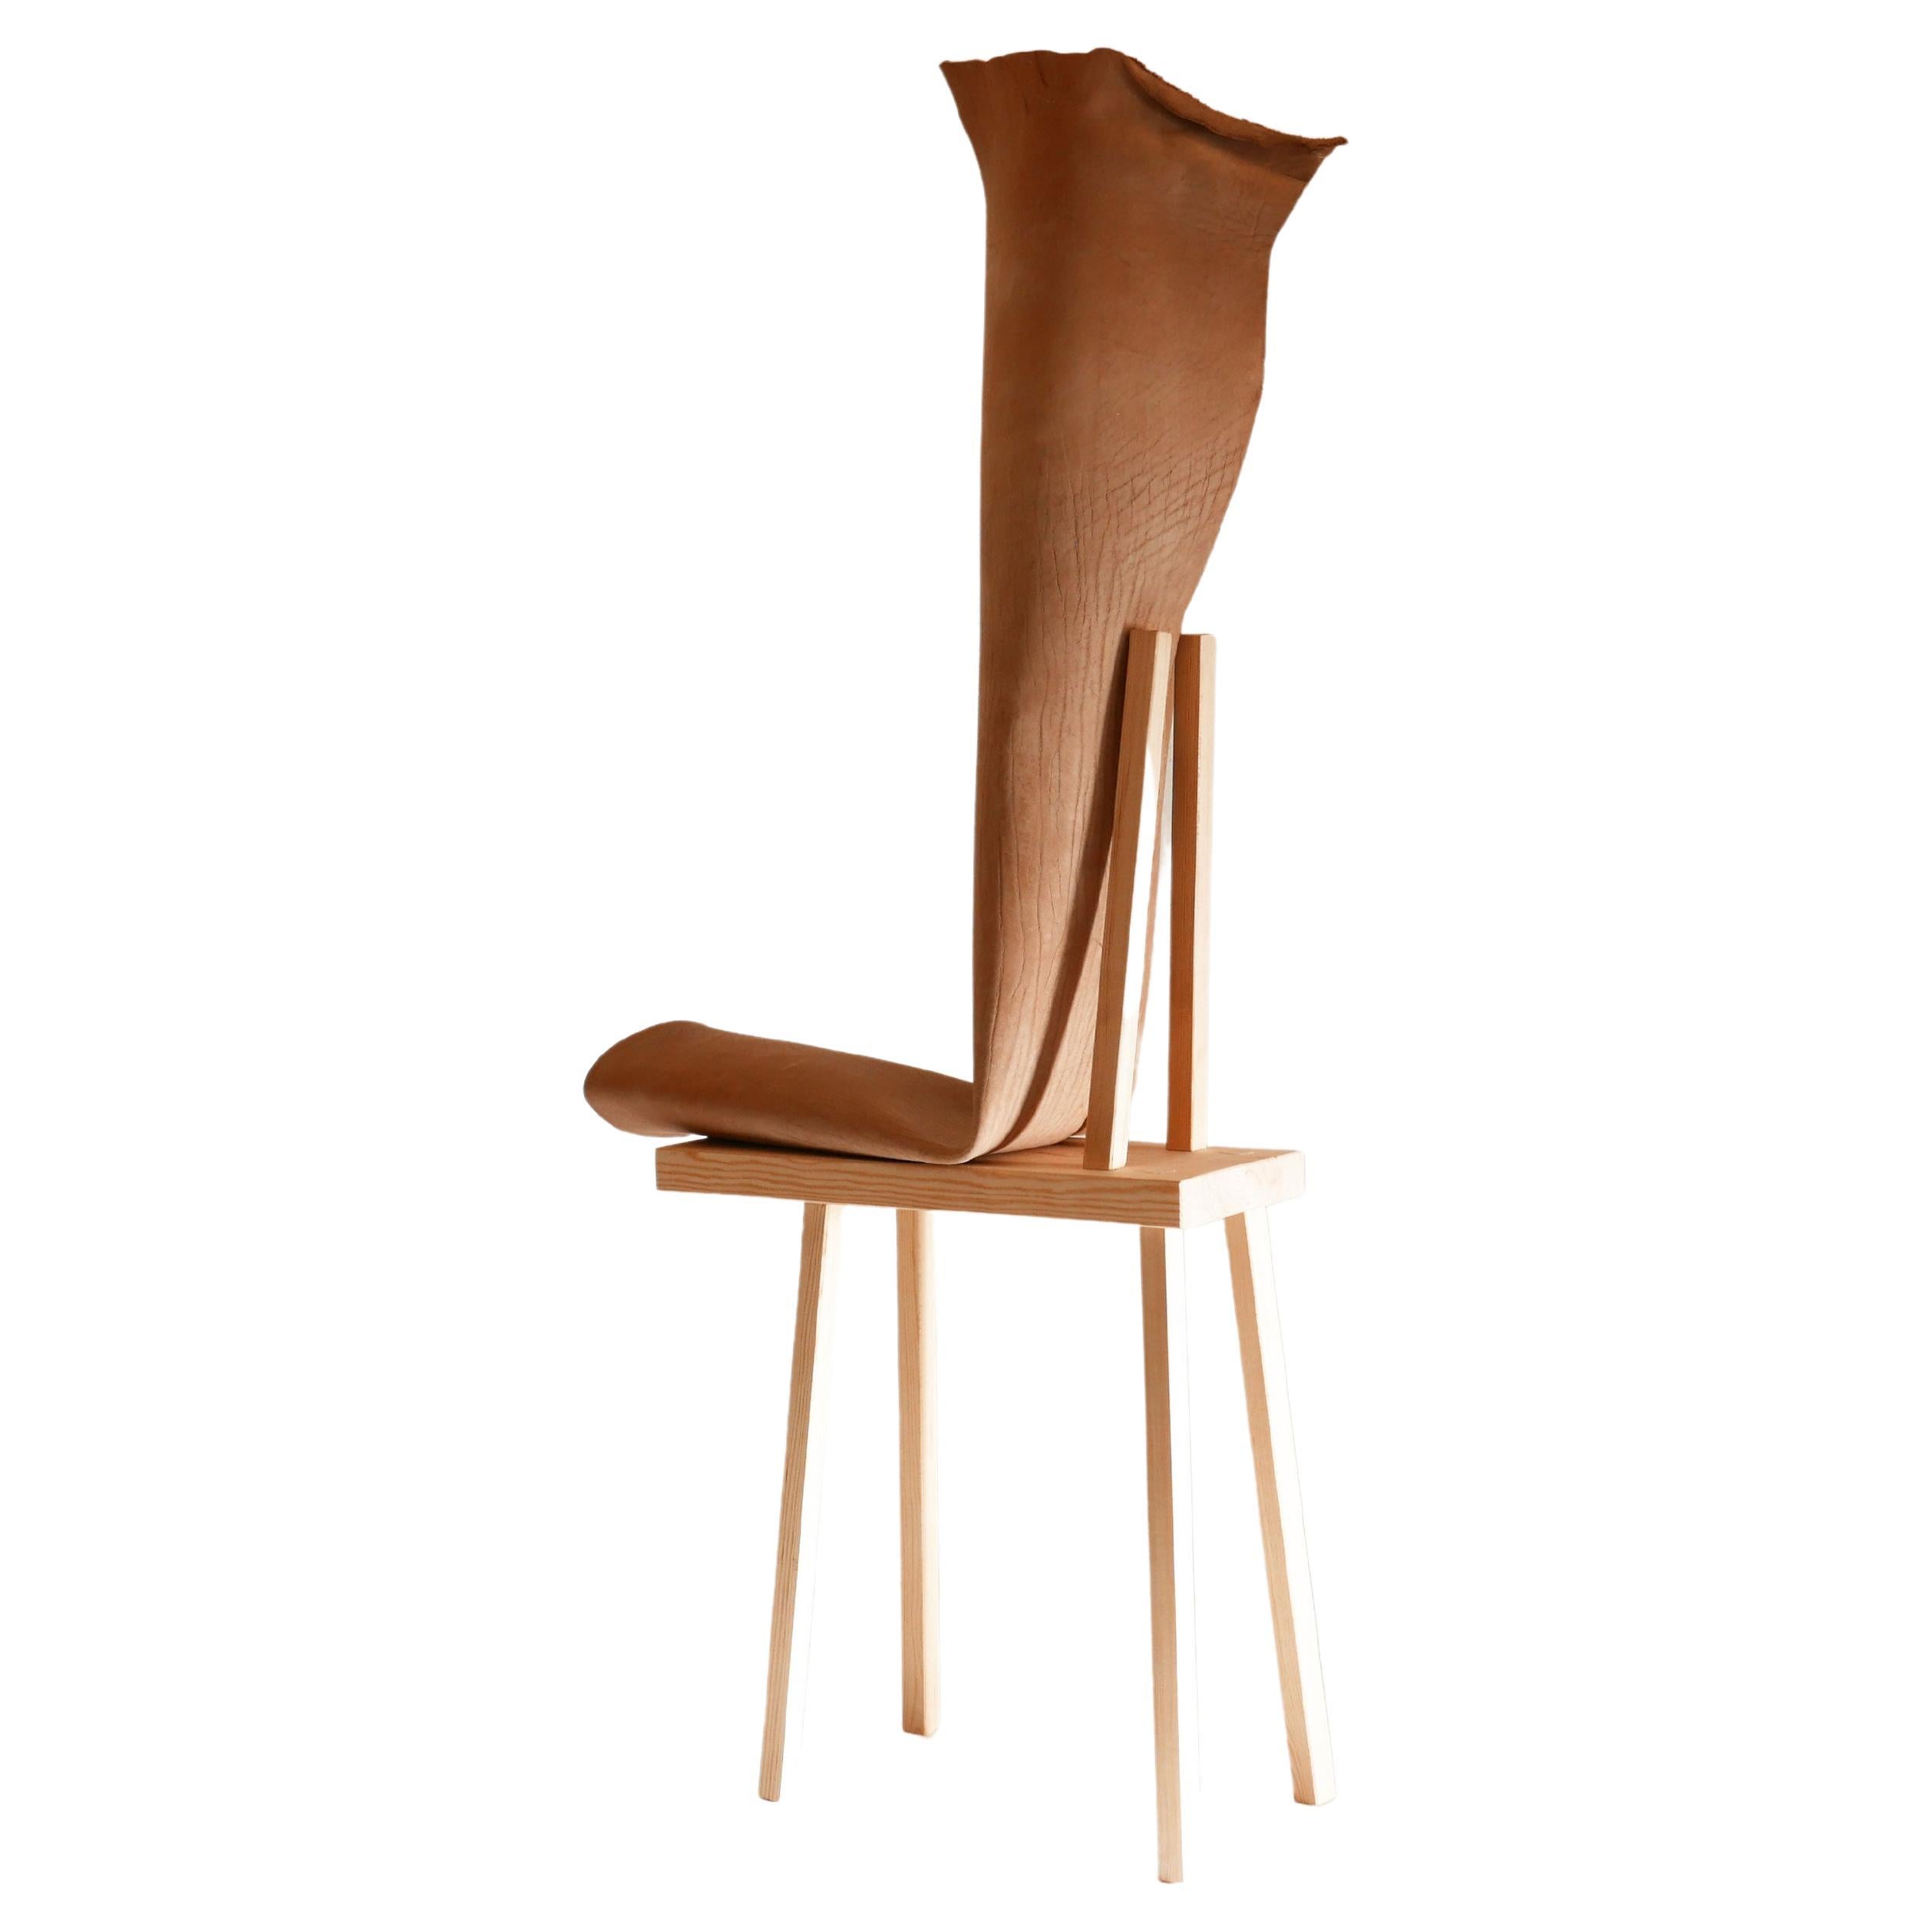 Coffre de Jordi Ribaud, cuir de buffle, meuble sculptural en bois de pin finlandais